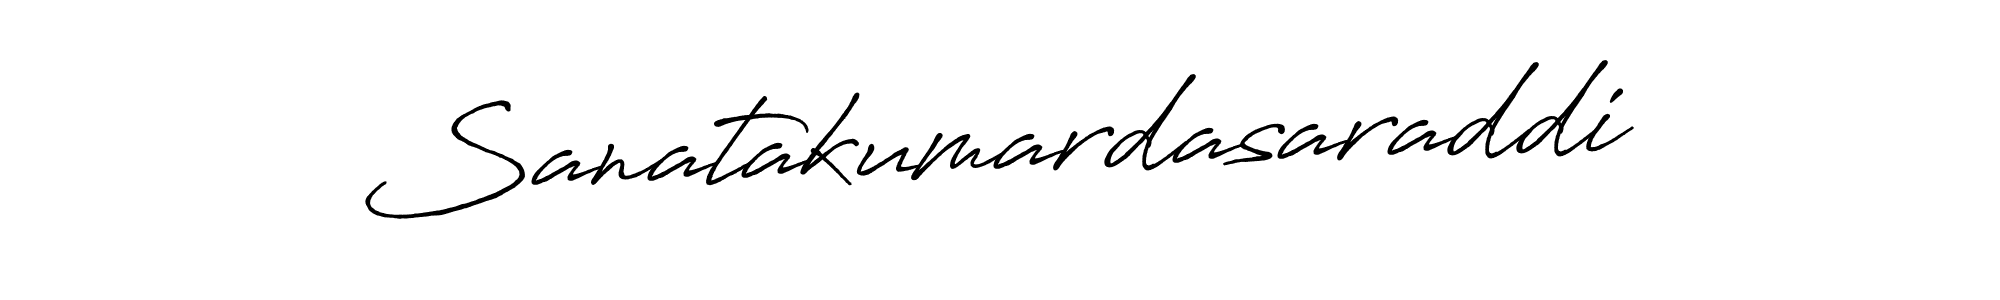 How to Draw Sanatakumardasaraddi signature style? Antro_Vectra_Bolder is a latest design signature styles for name Sanatakumardasaraddi. Sanatakumardasaraddi signature style 7 images and pictures png